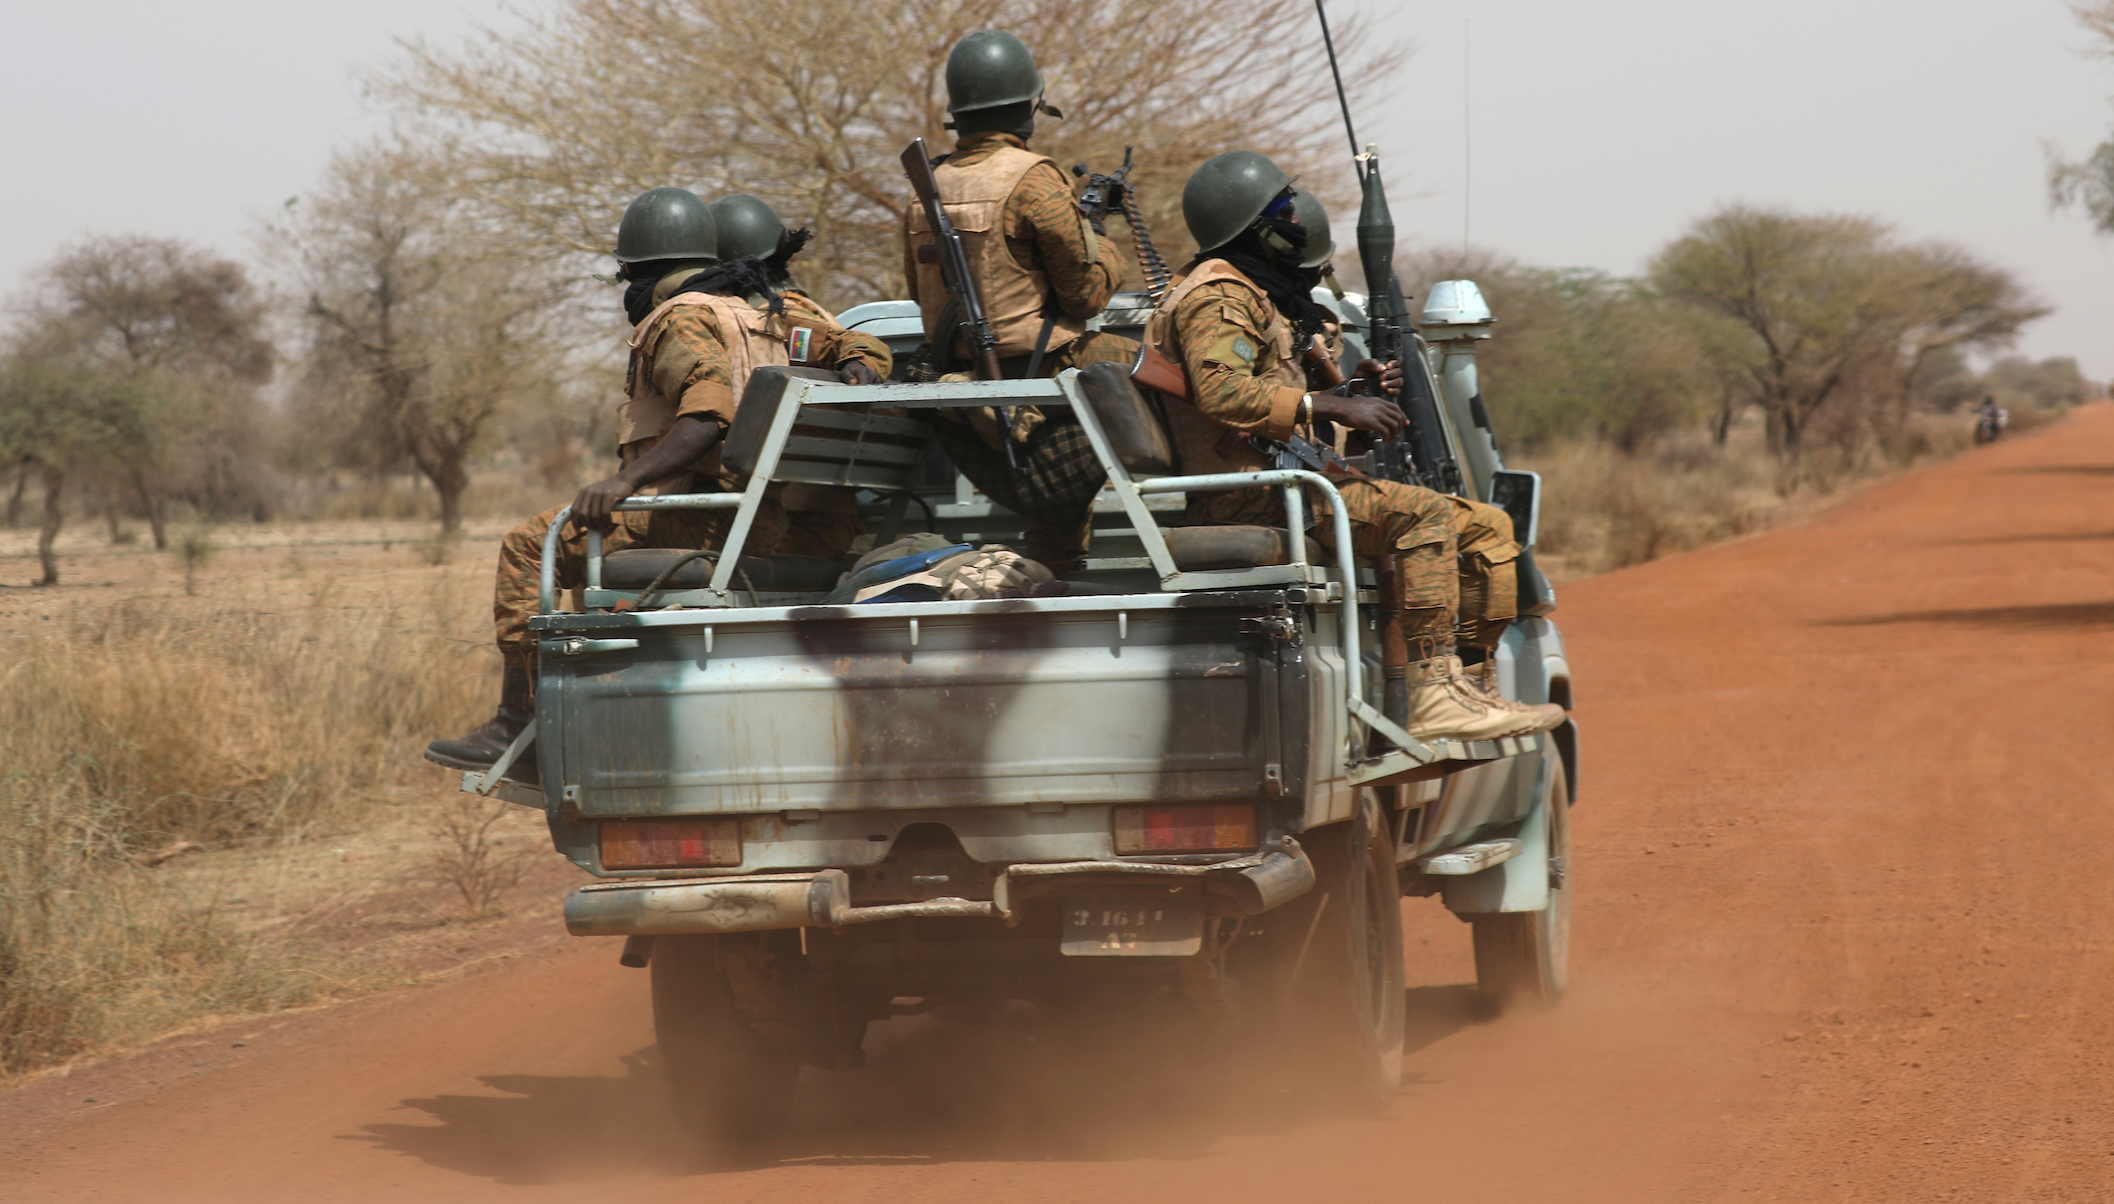 Soldiers from Burkina Faso patrol on the road of Gorgadji in sahel area, Burkina Faso